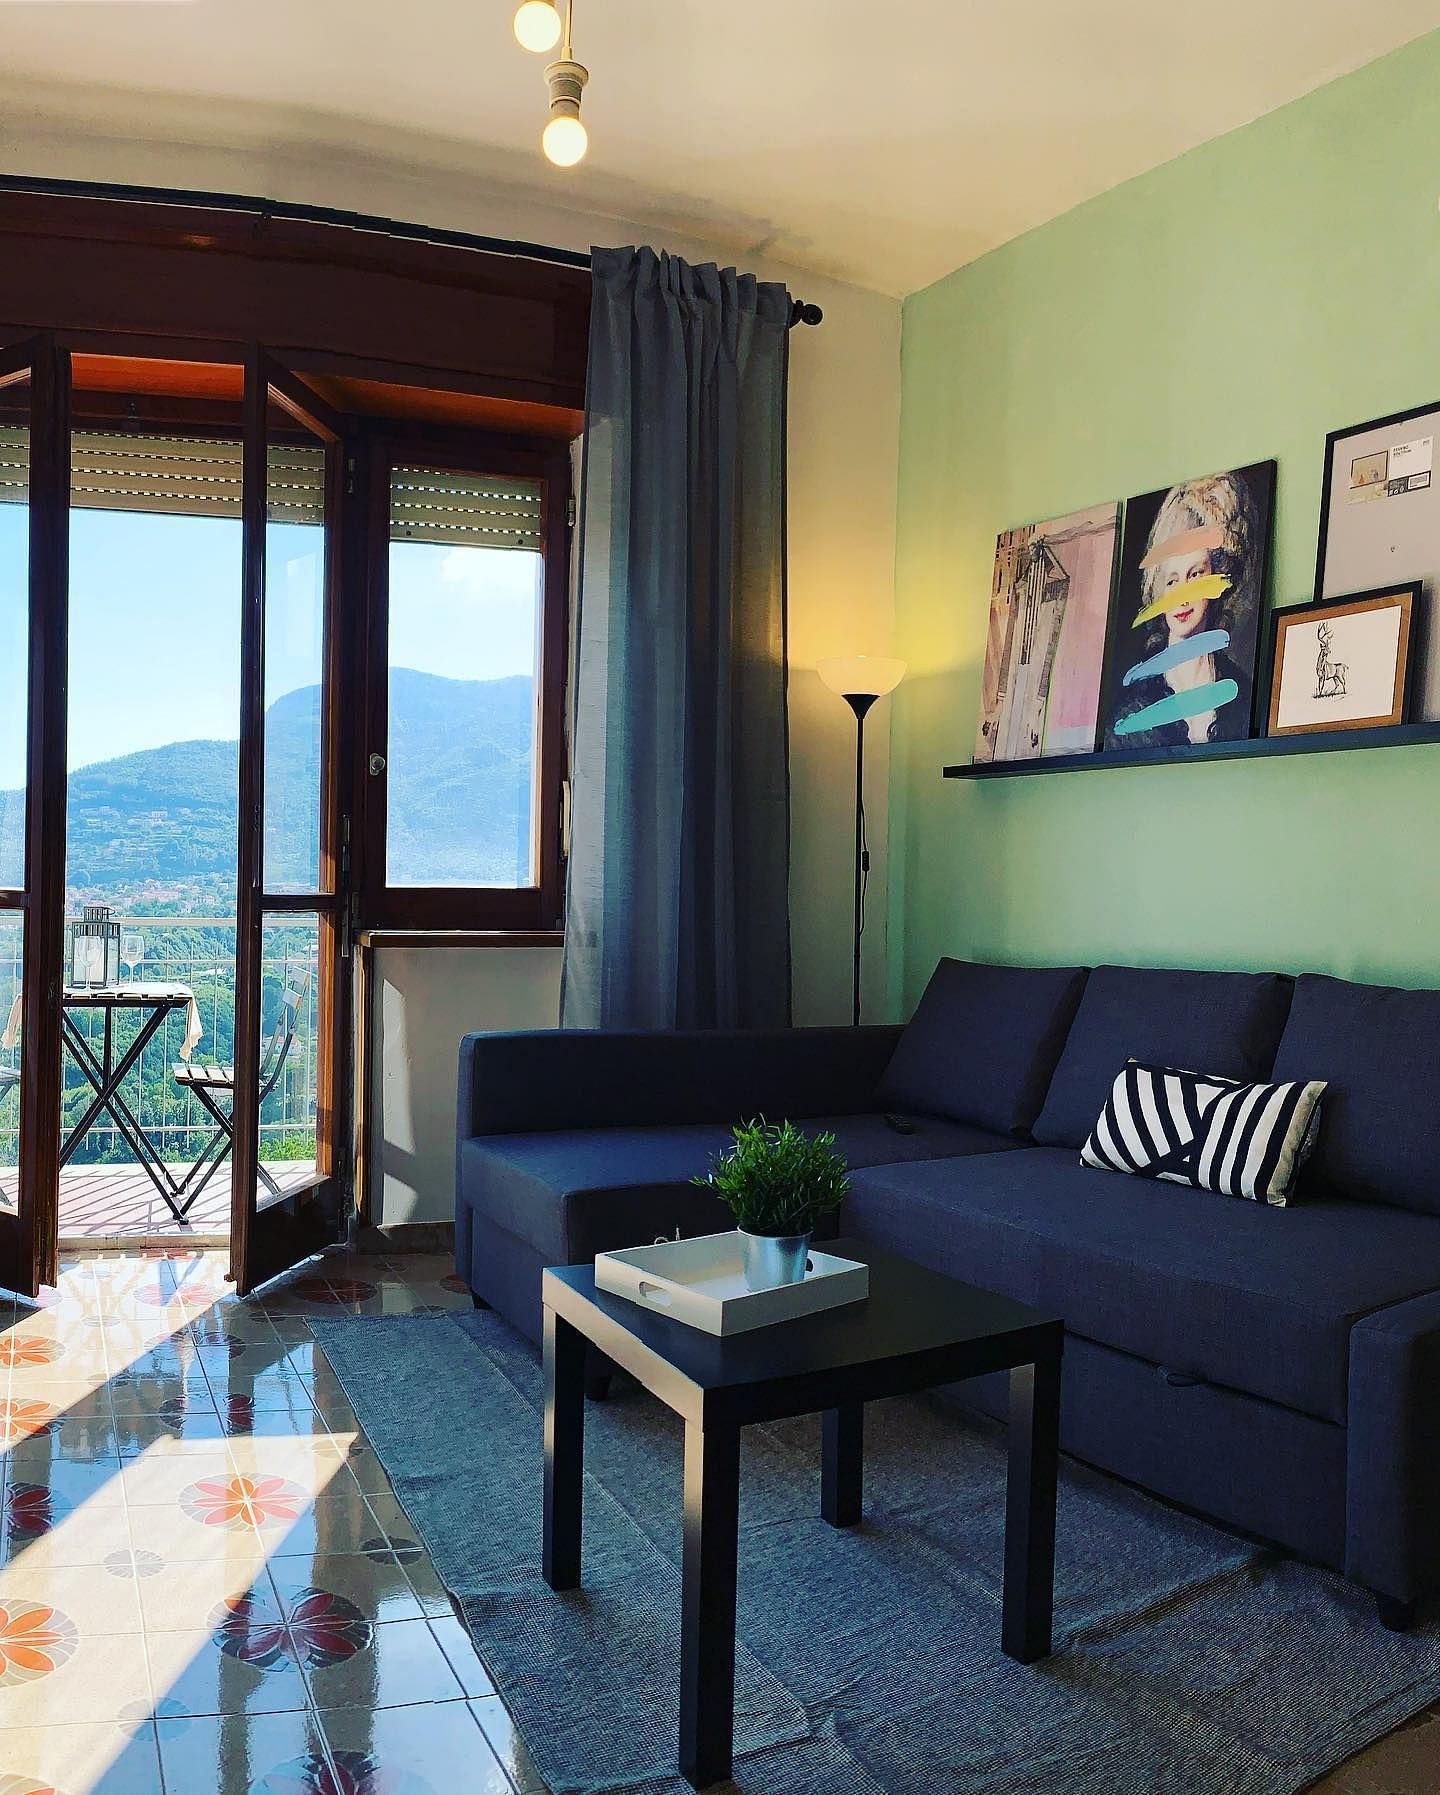 JWguest Apartment at Pianillo, Campania | Cozy apartment in Amalfi Coast  | Jwbnb no brobnb 4